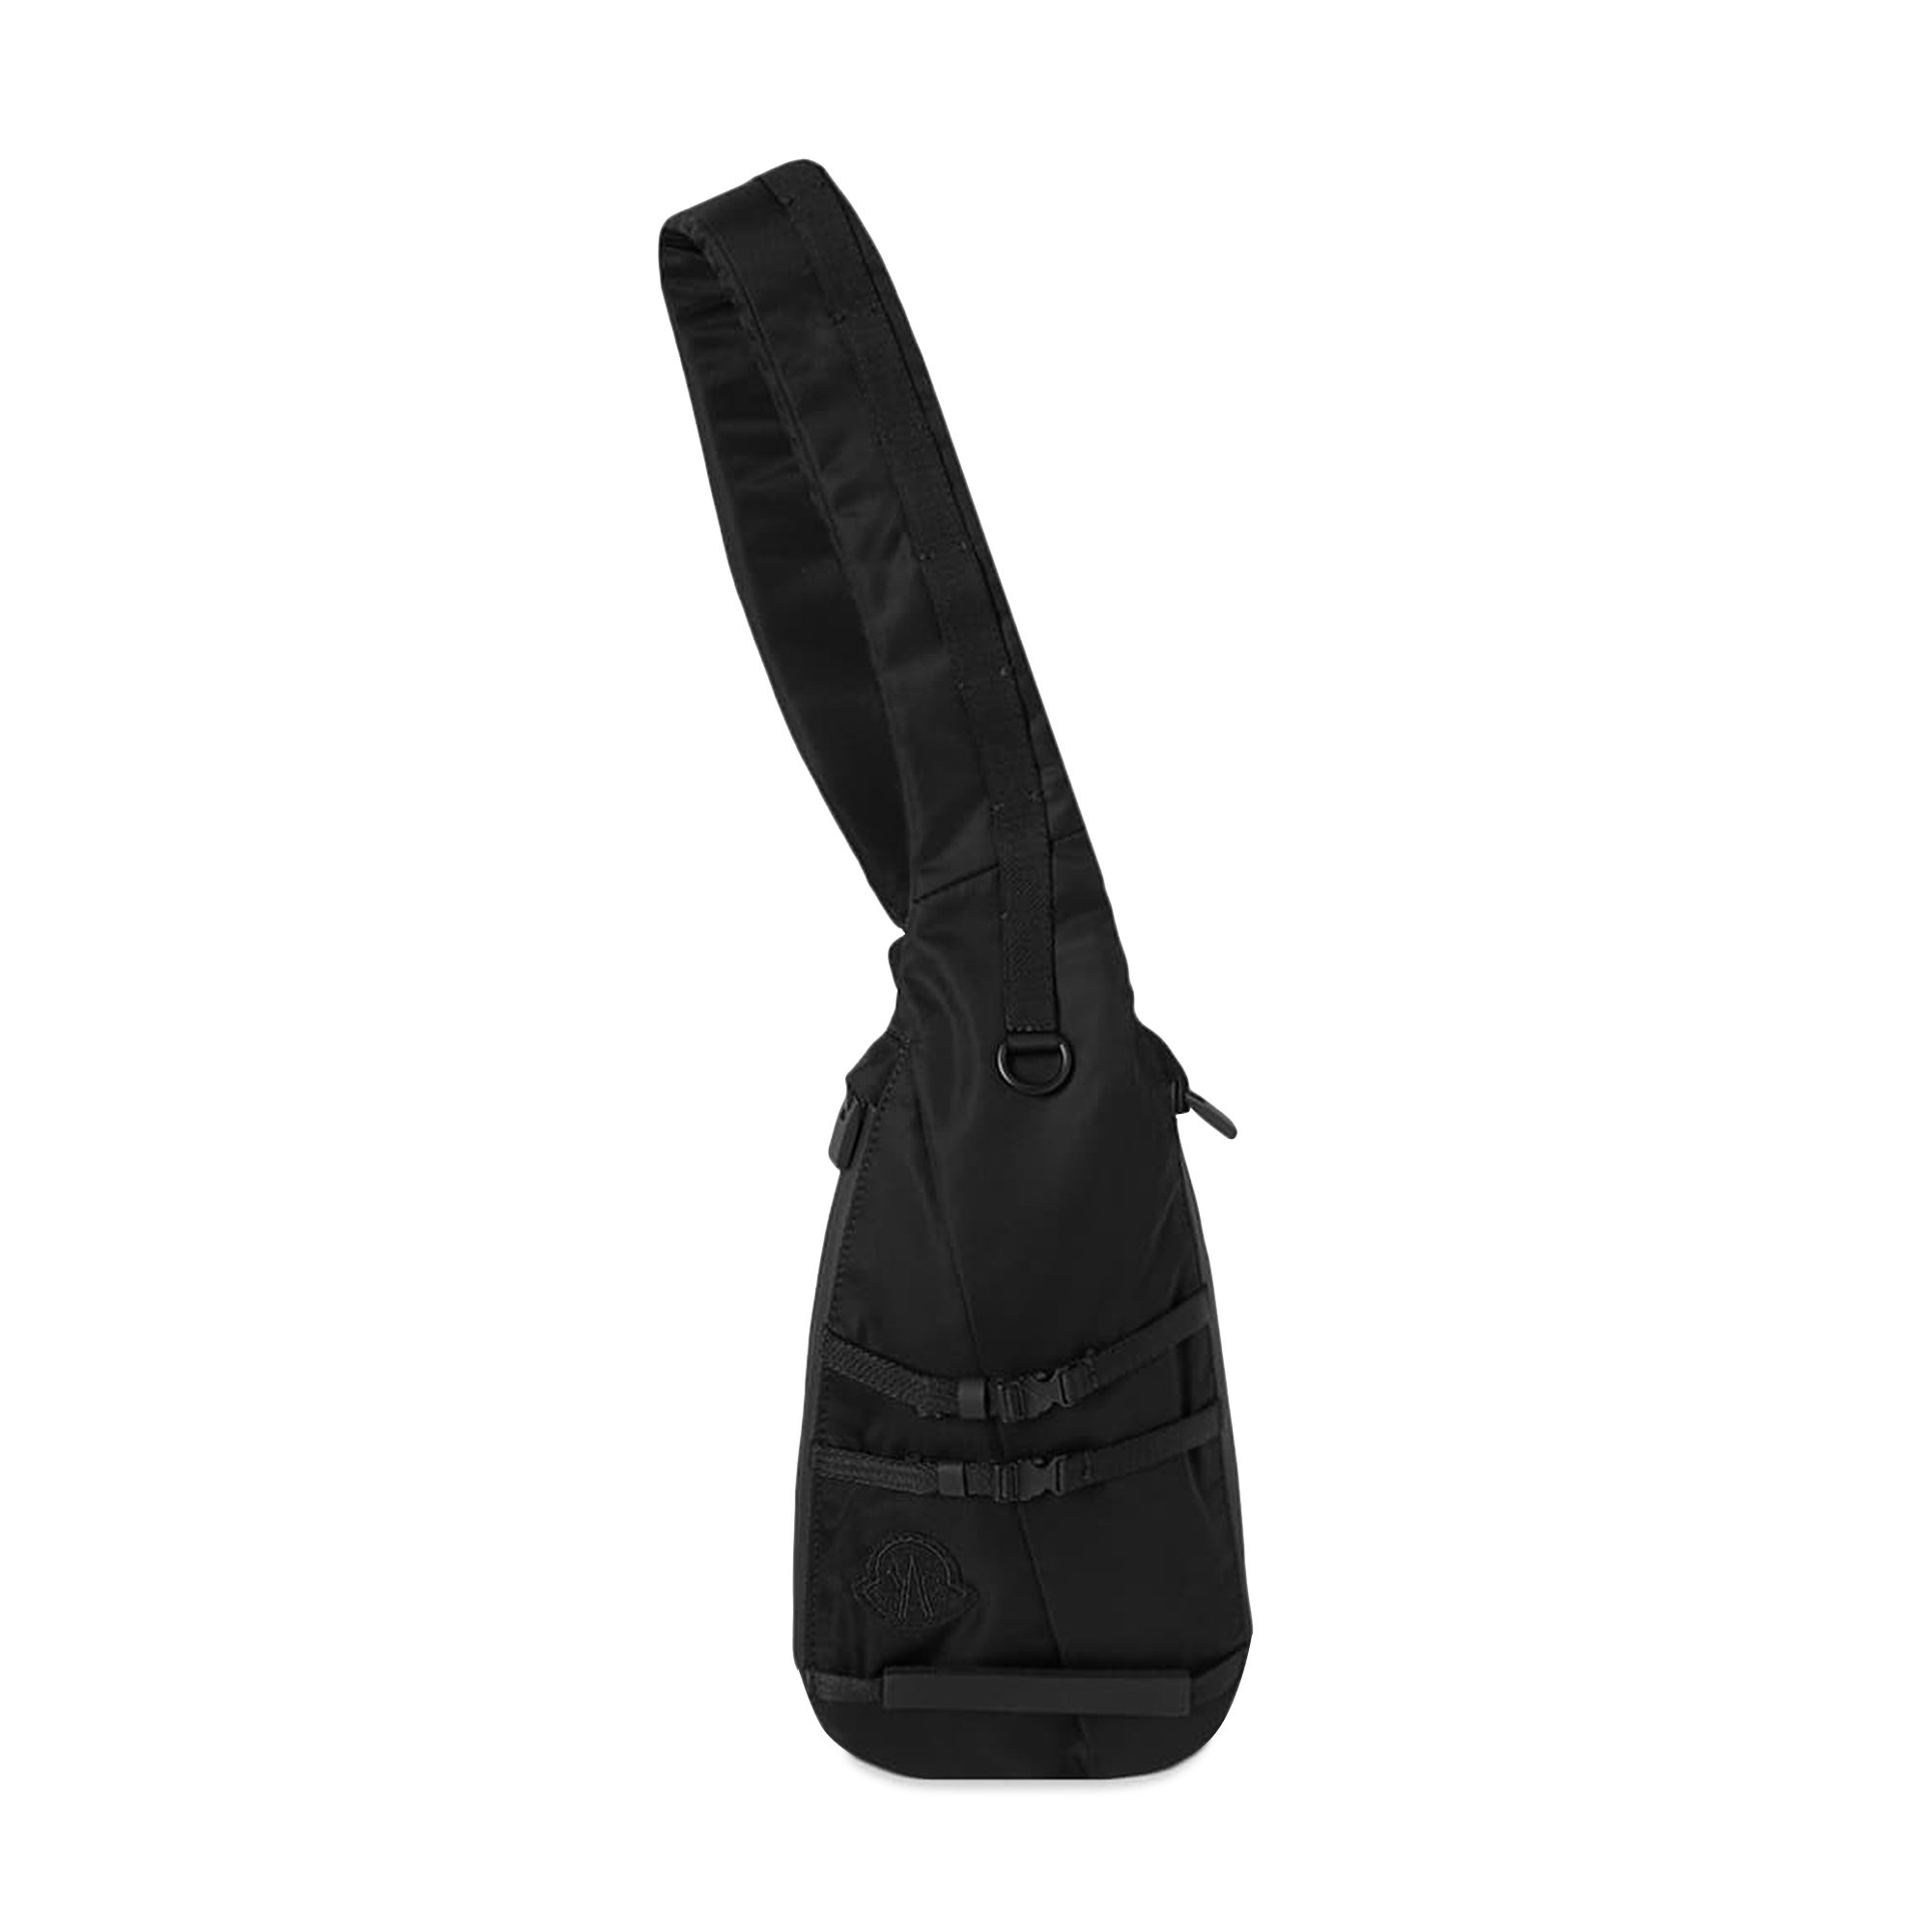 Moncler x 1017 ALYX 9SM Small Crossbody Bag 'Black' | GOAT